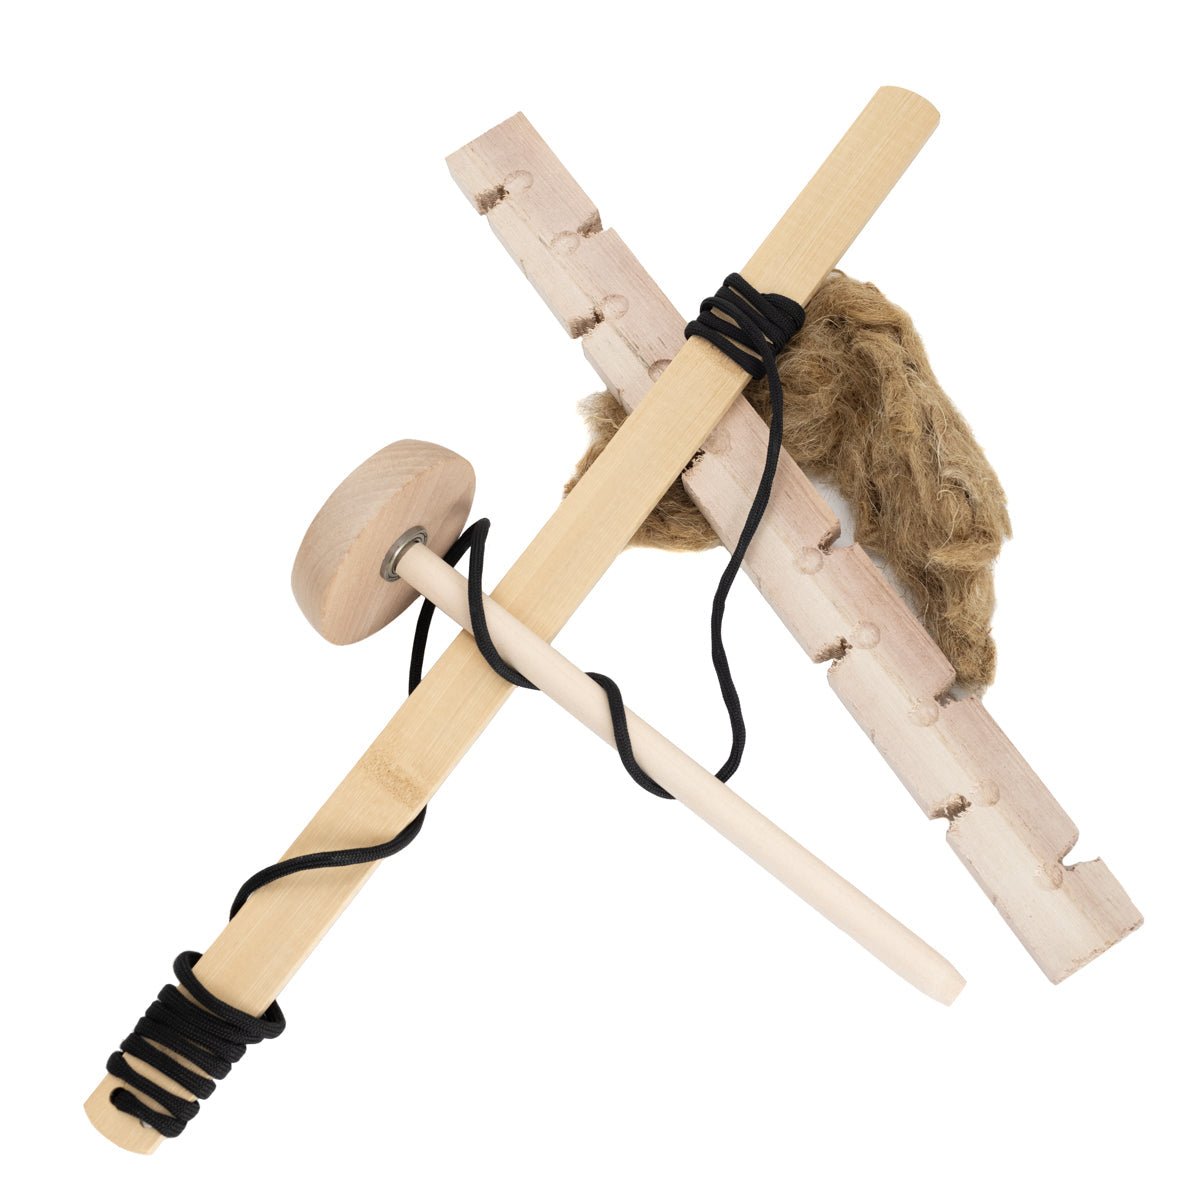 Bow Drill Fire Starter Kit - Groove Rabbit